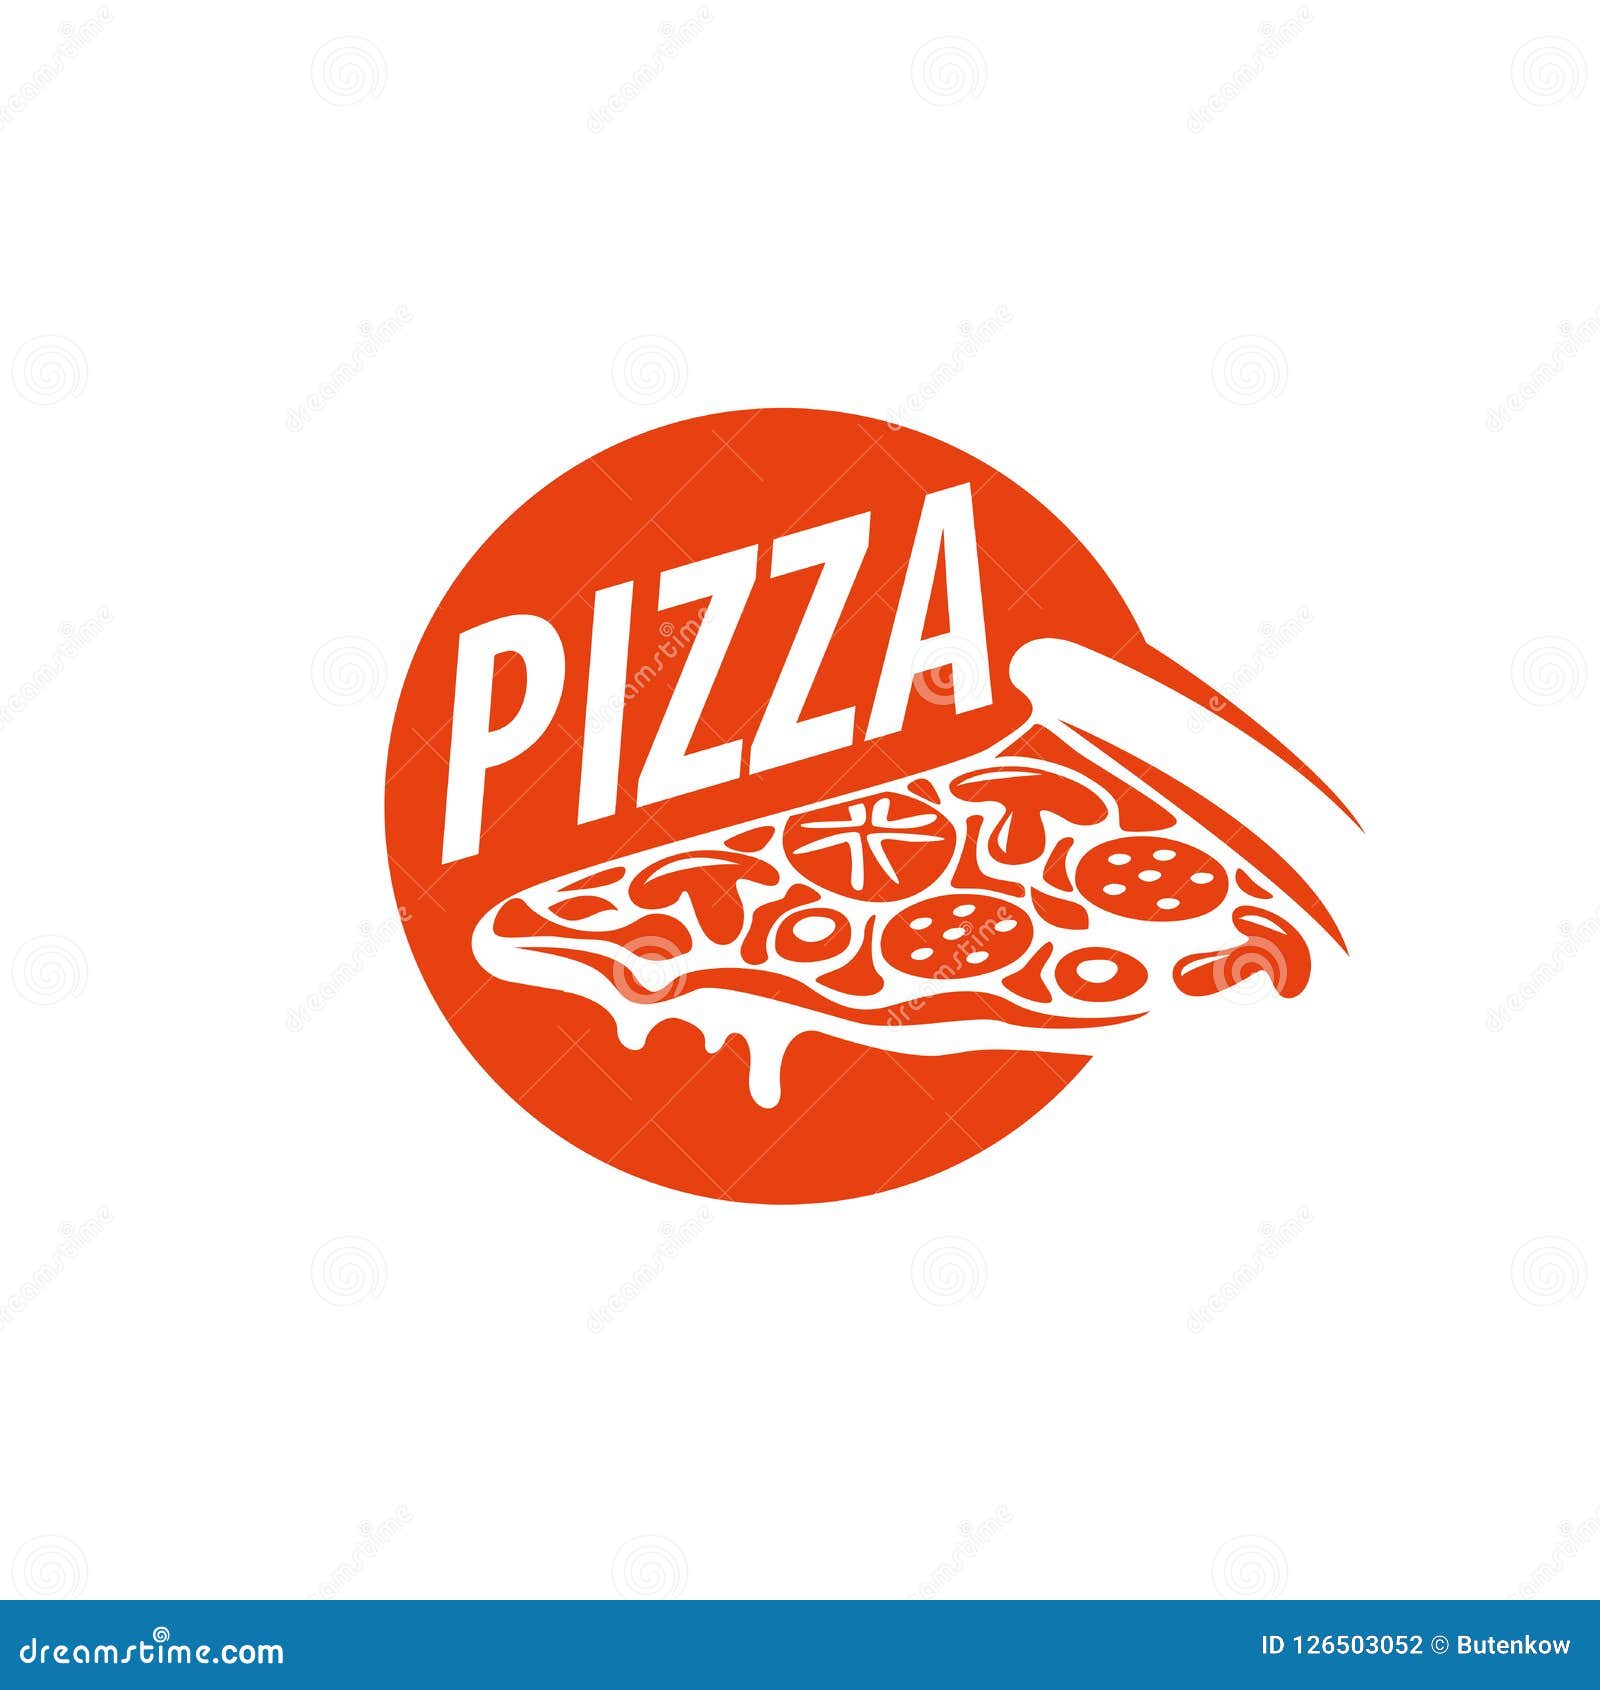 Pizza logo Vectors & Illustrations for Free Download